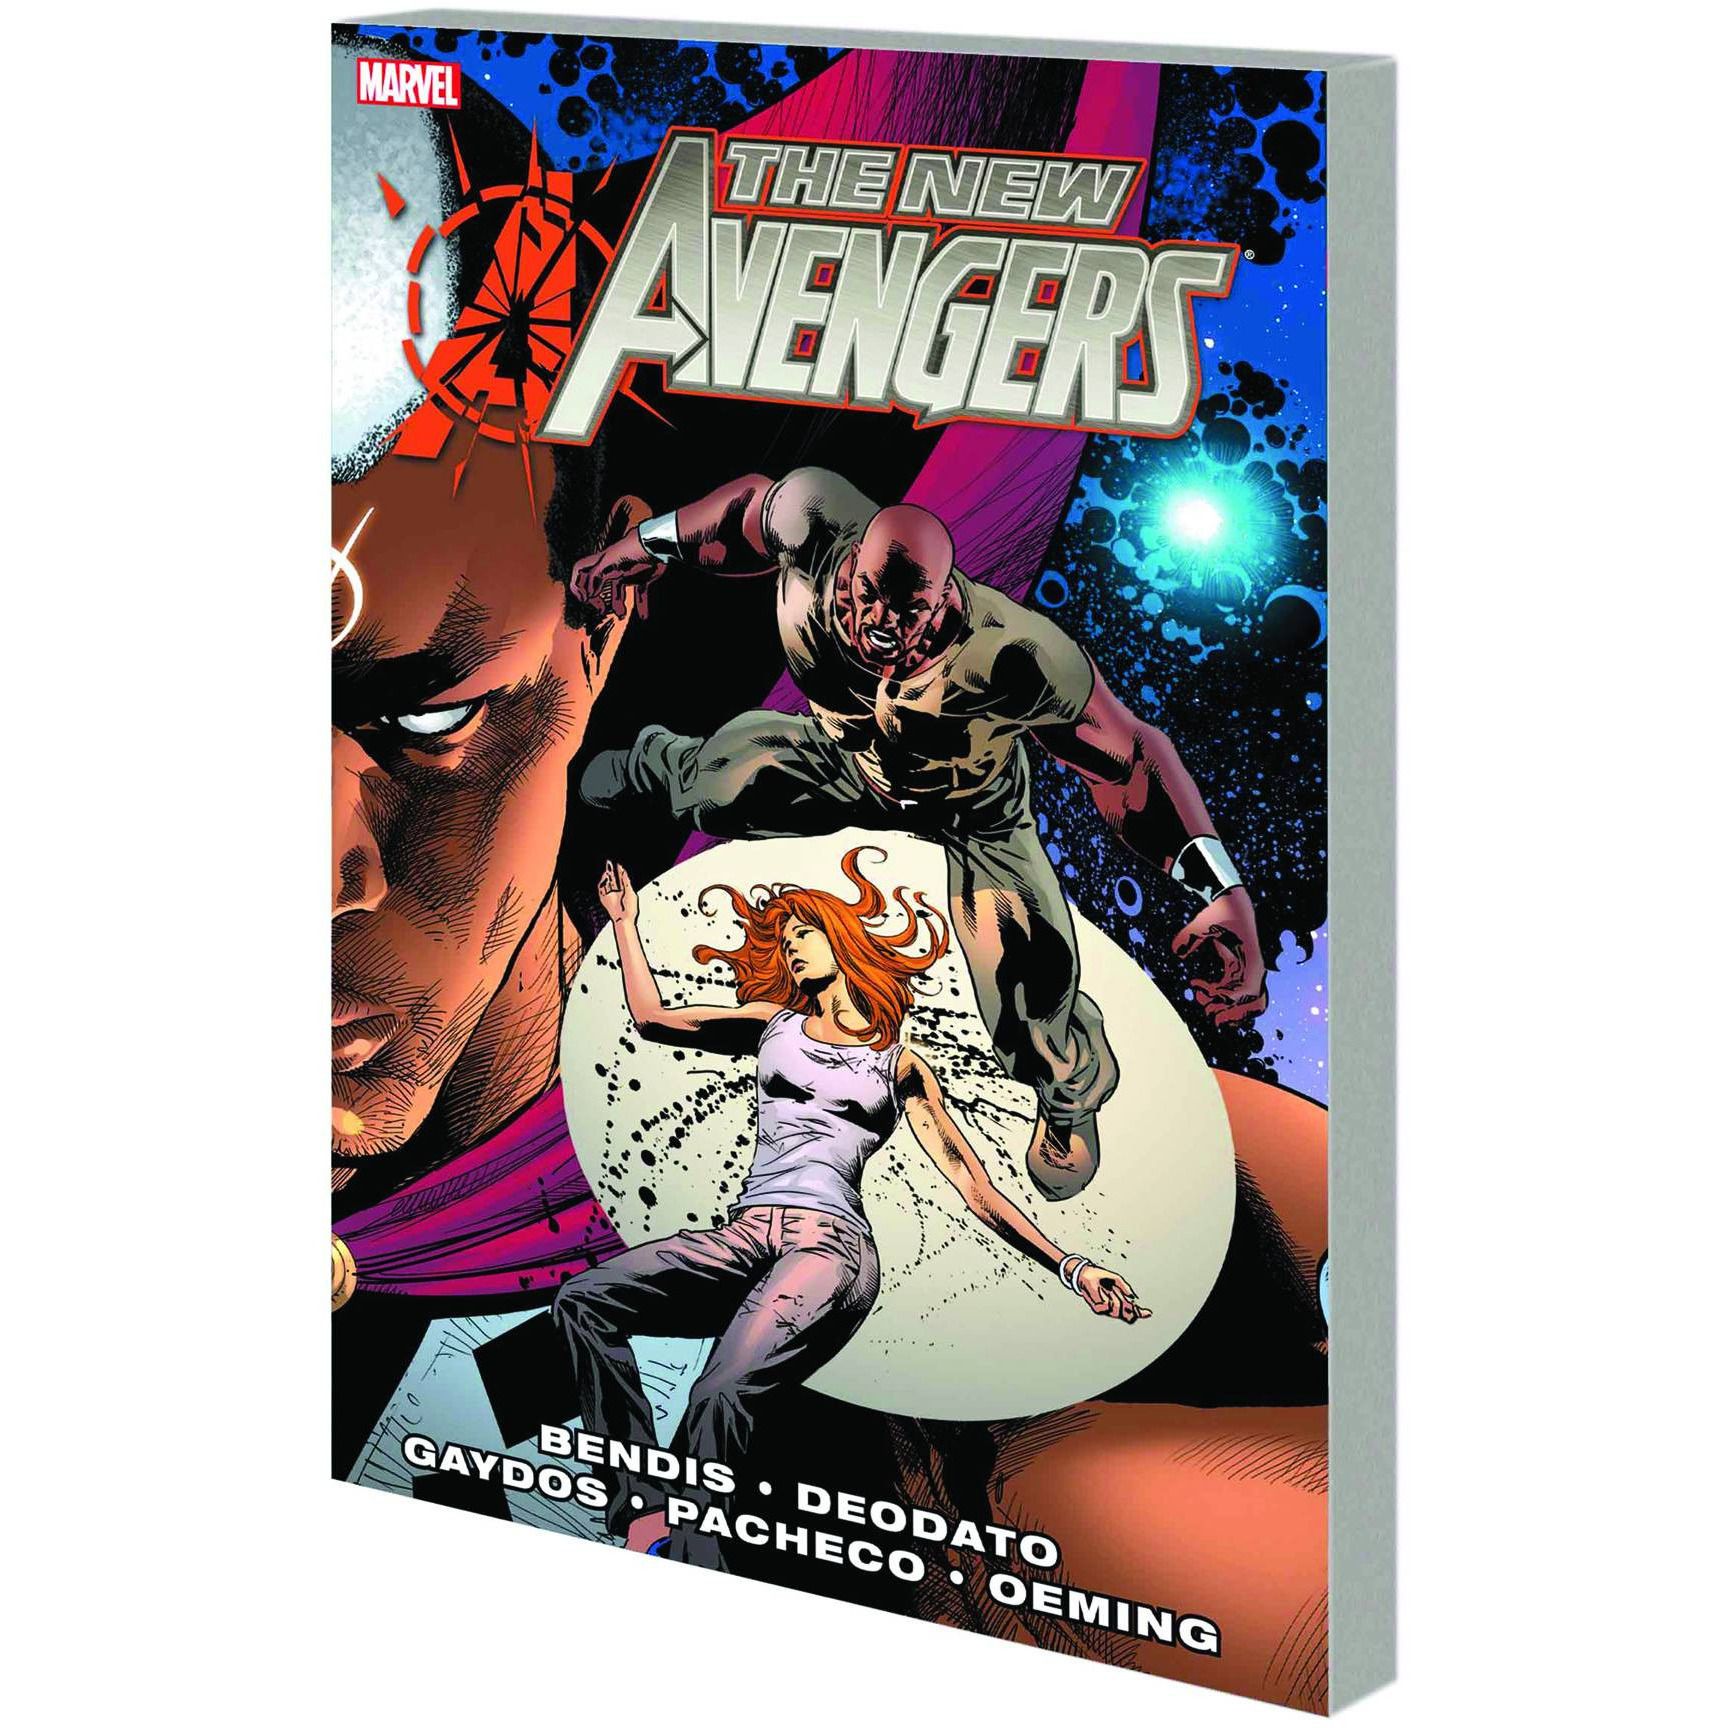  New Avengers BY Brian Michael Bendis TP VOL 05 Uncanny!